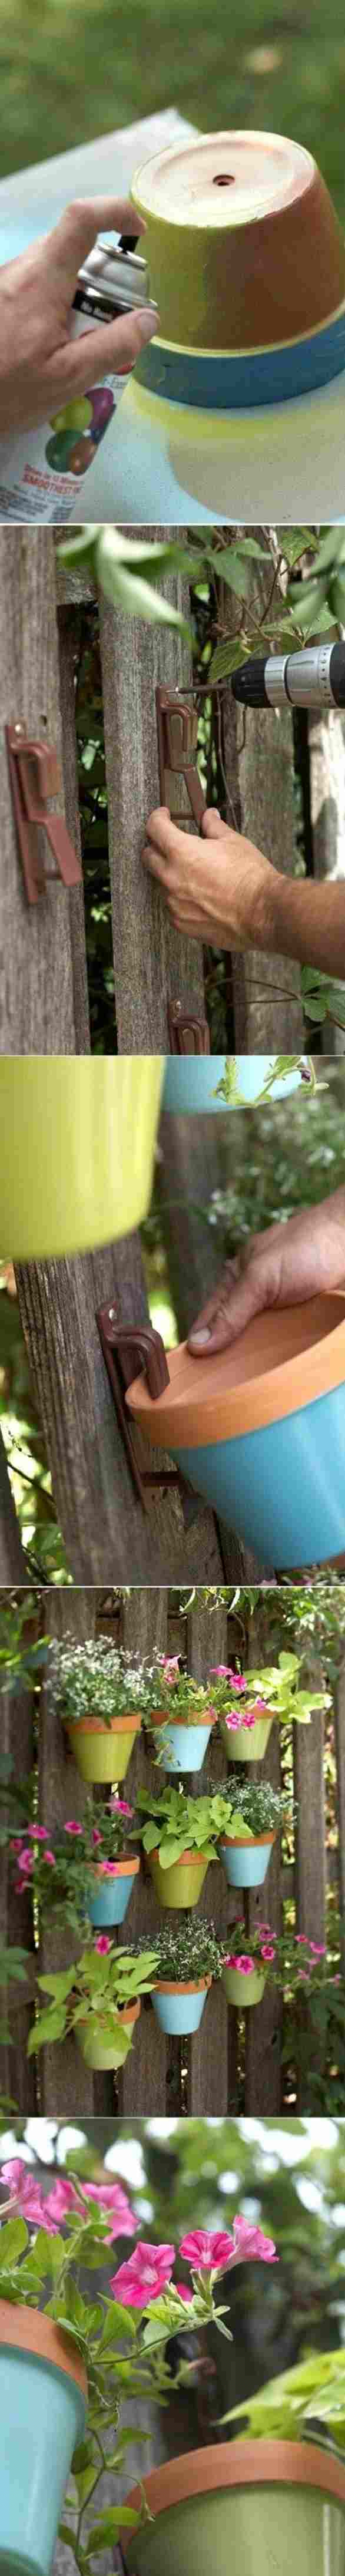 DIY fun crafts ideas flower pots fence